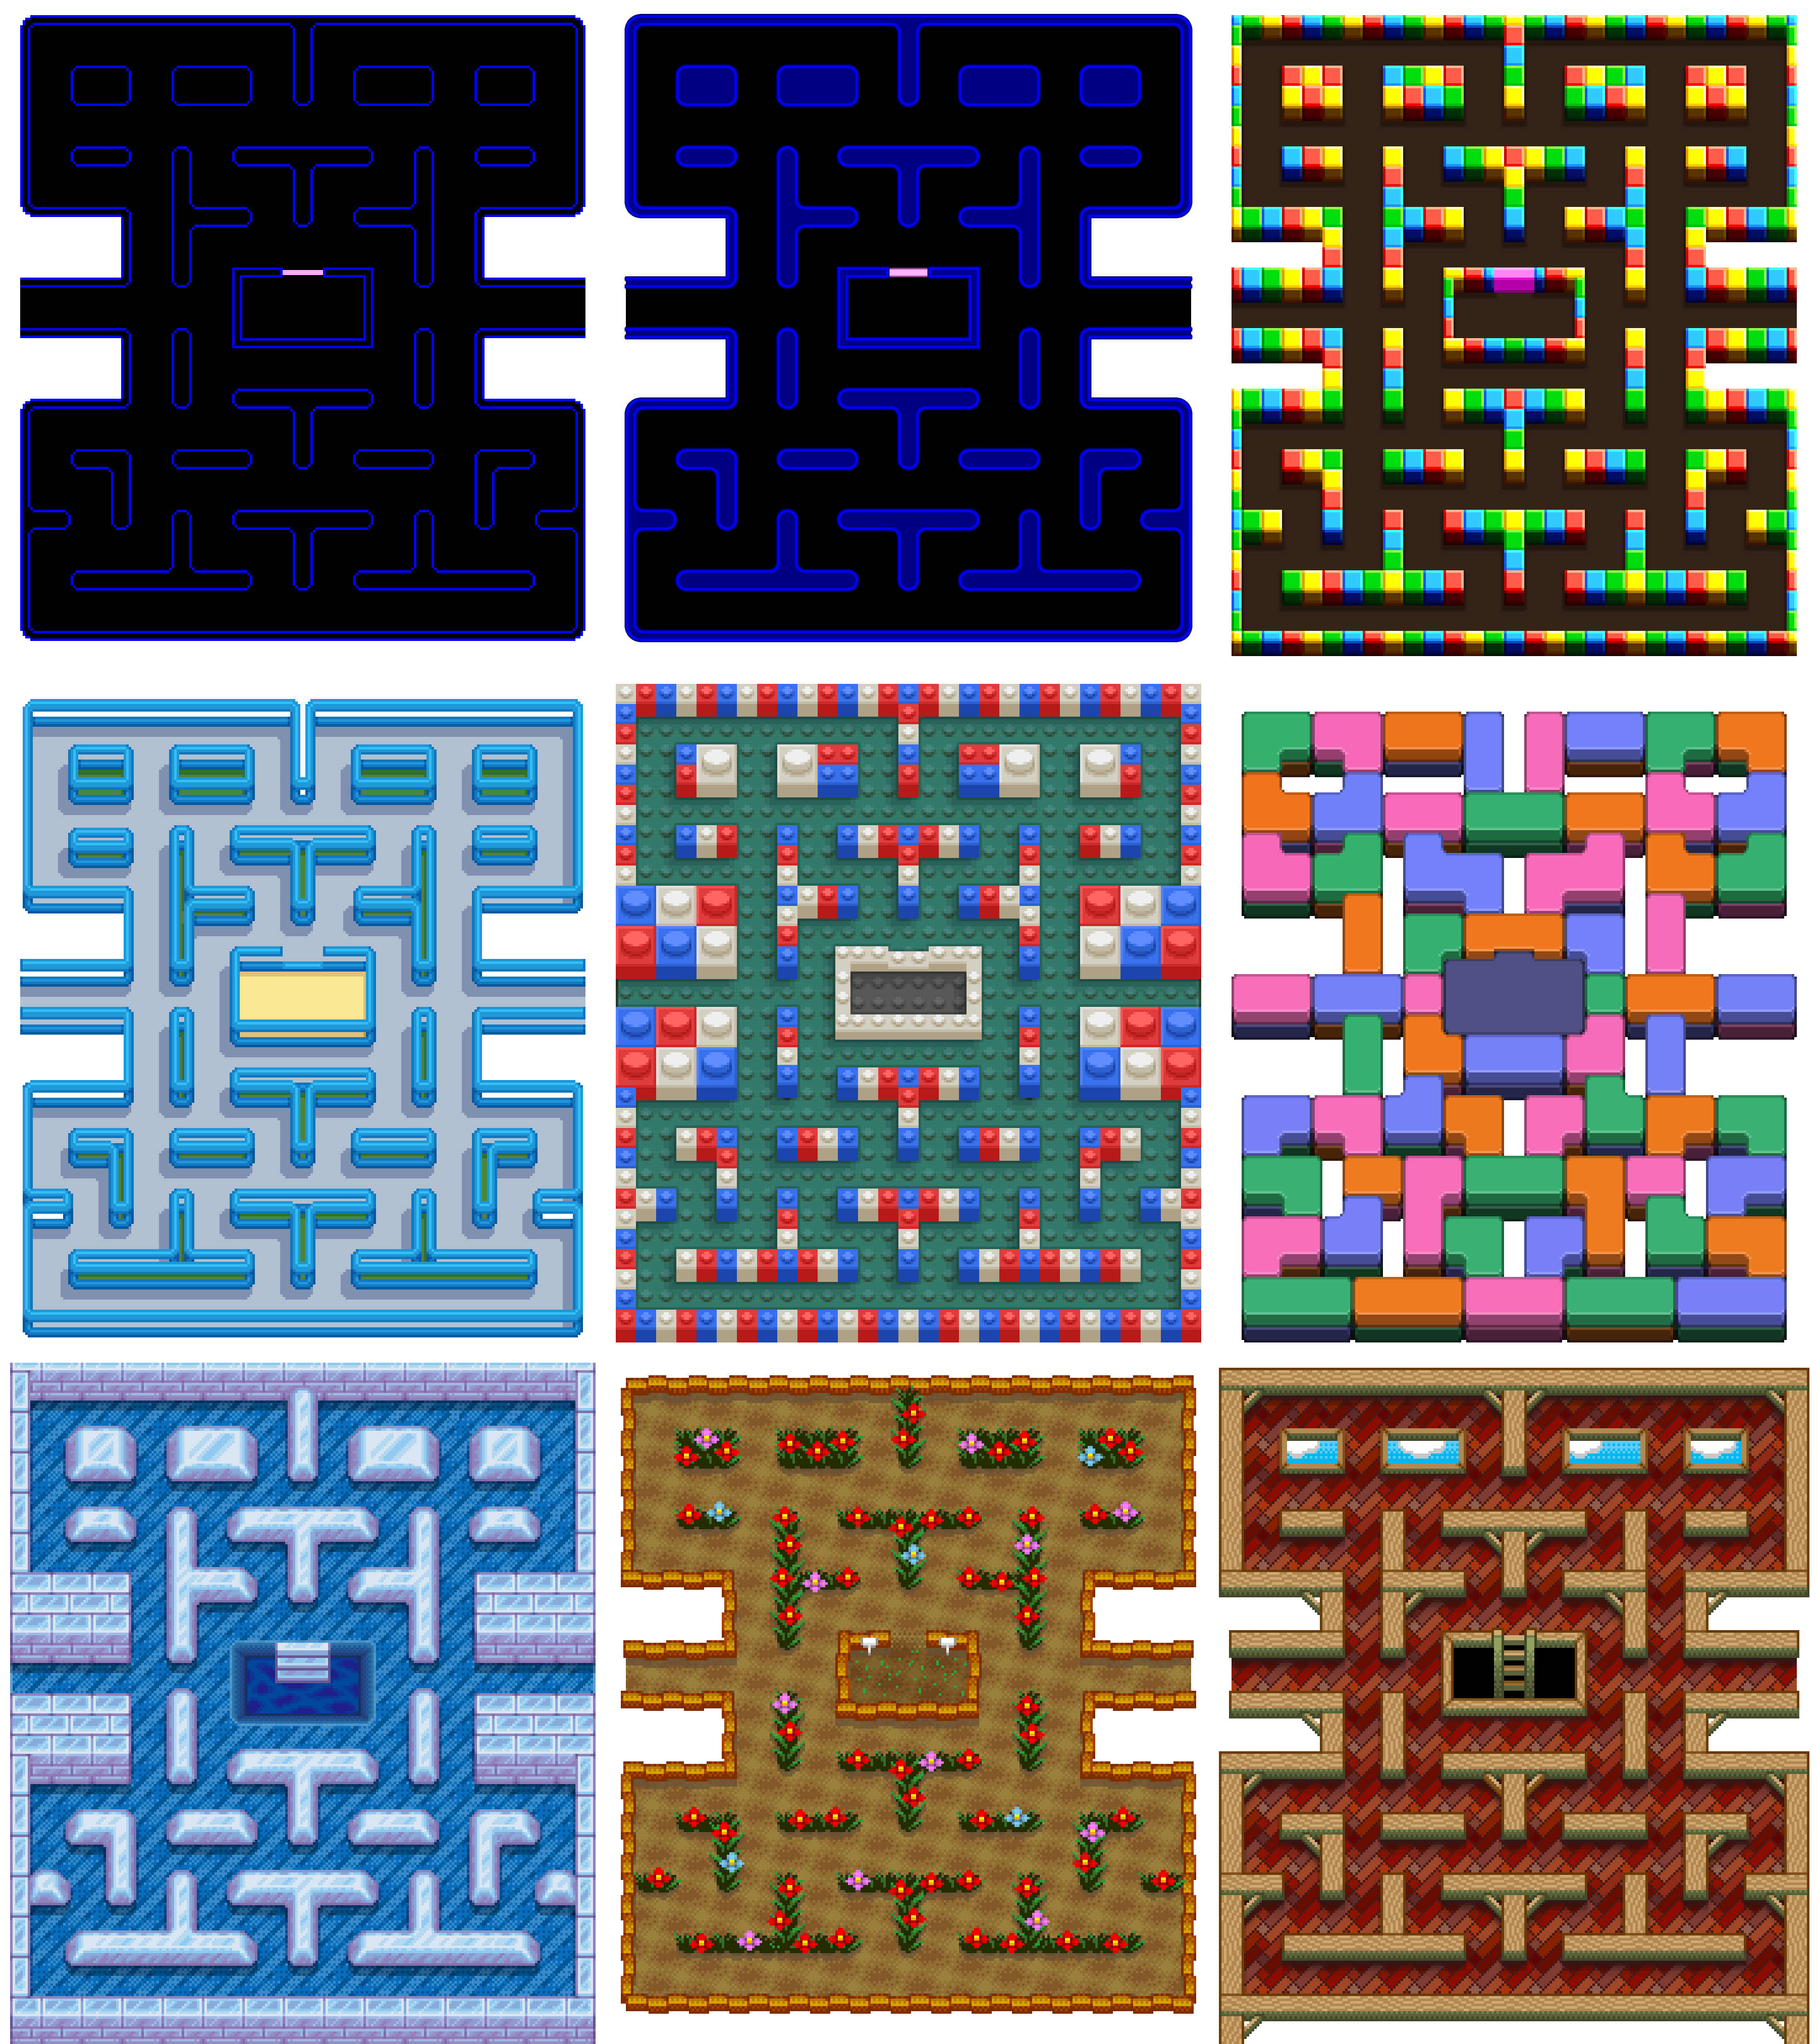 Regular Maze Themes